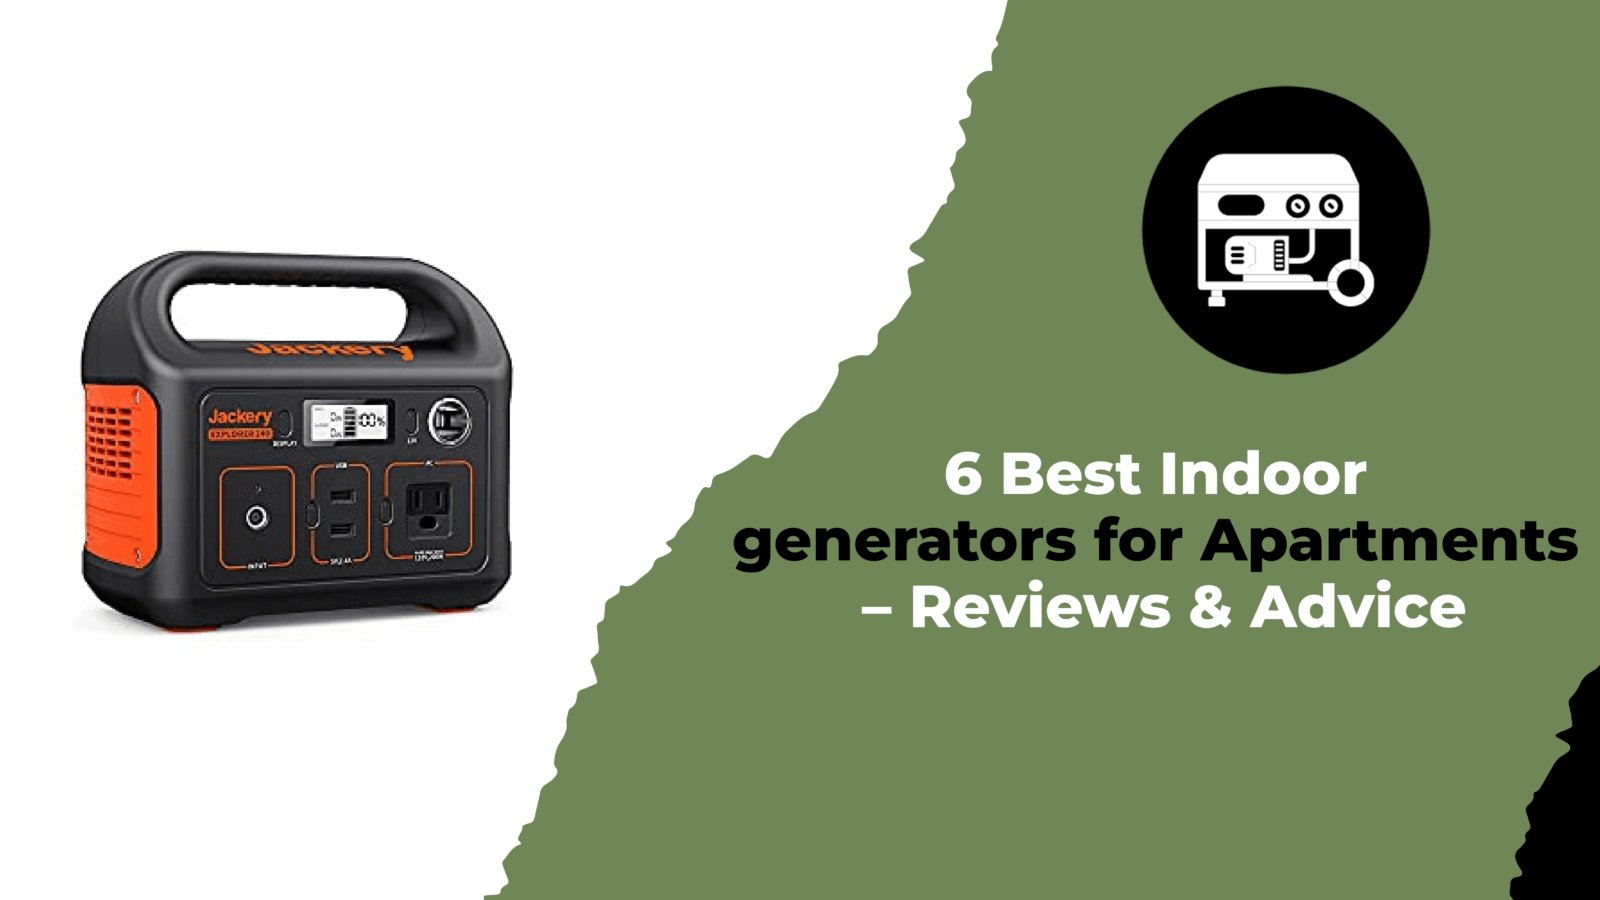 6 Best Indoor generators for Apartments – Reviews & Advice